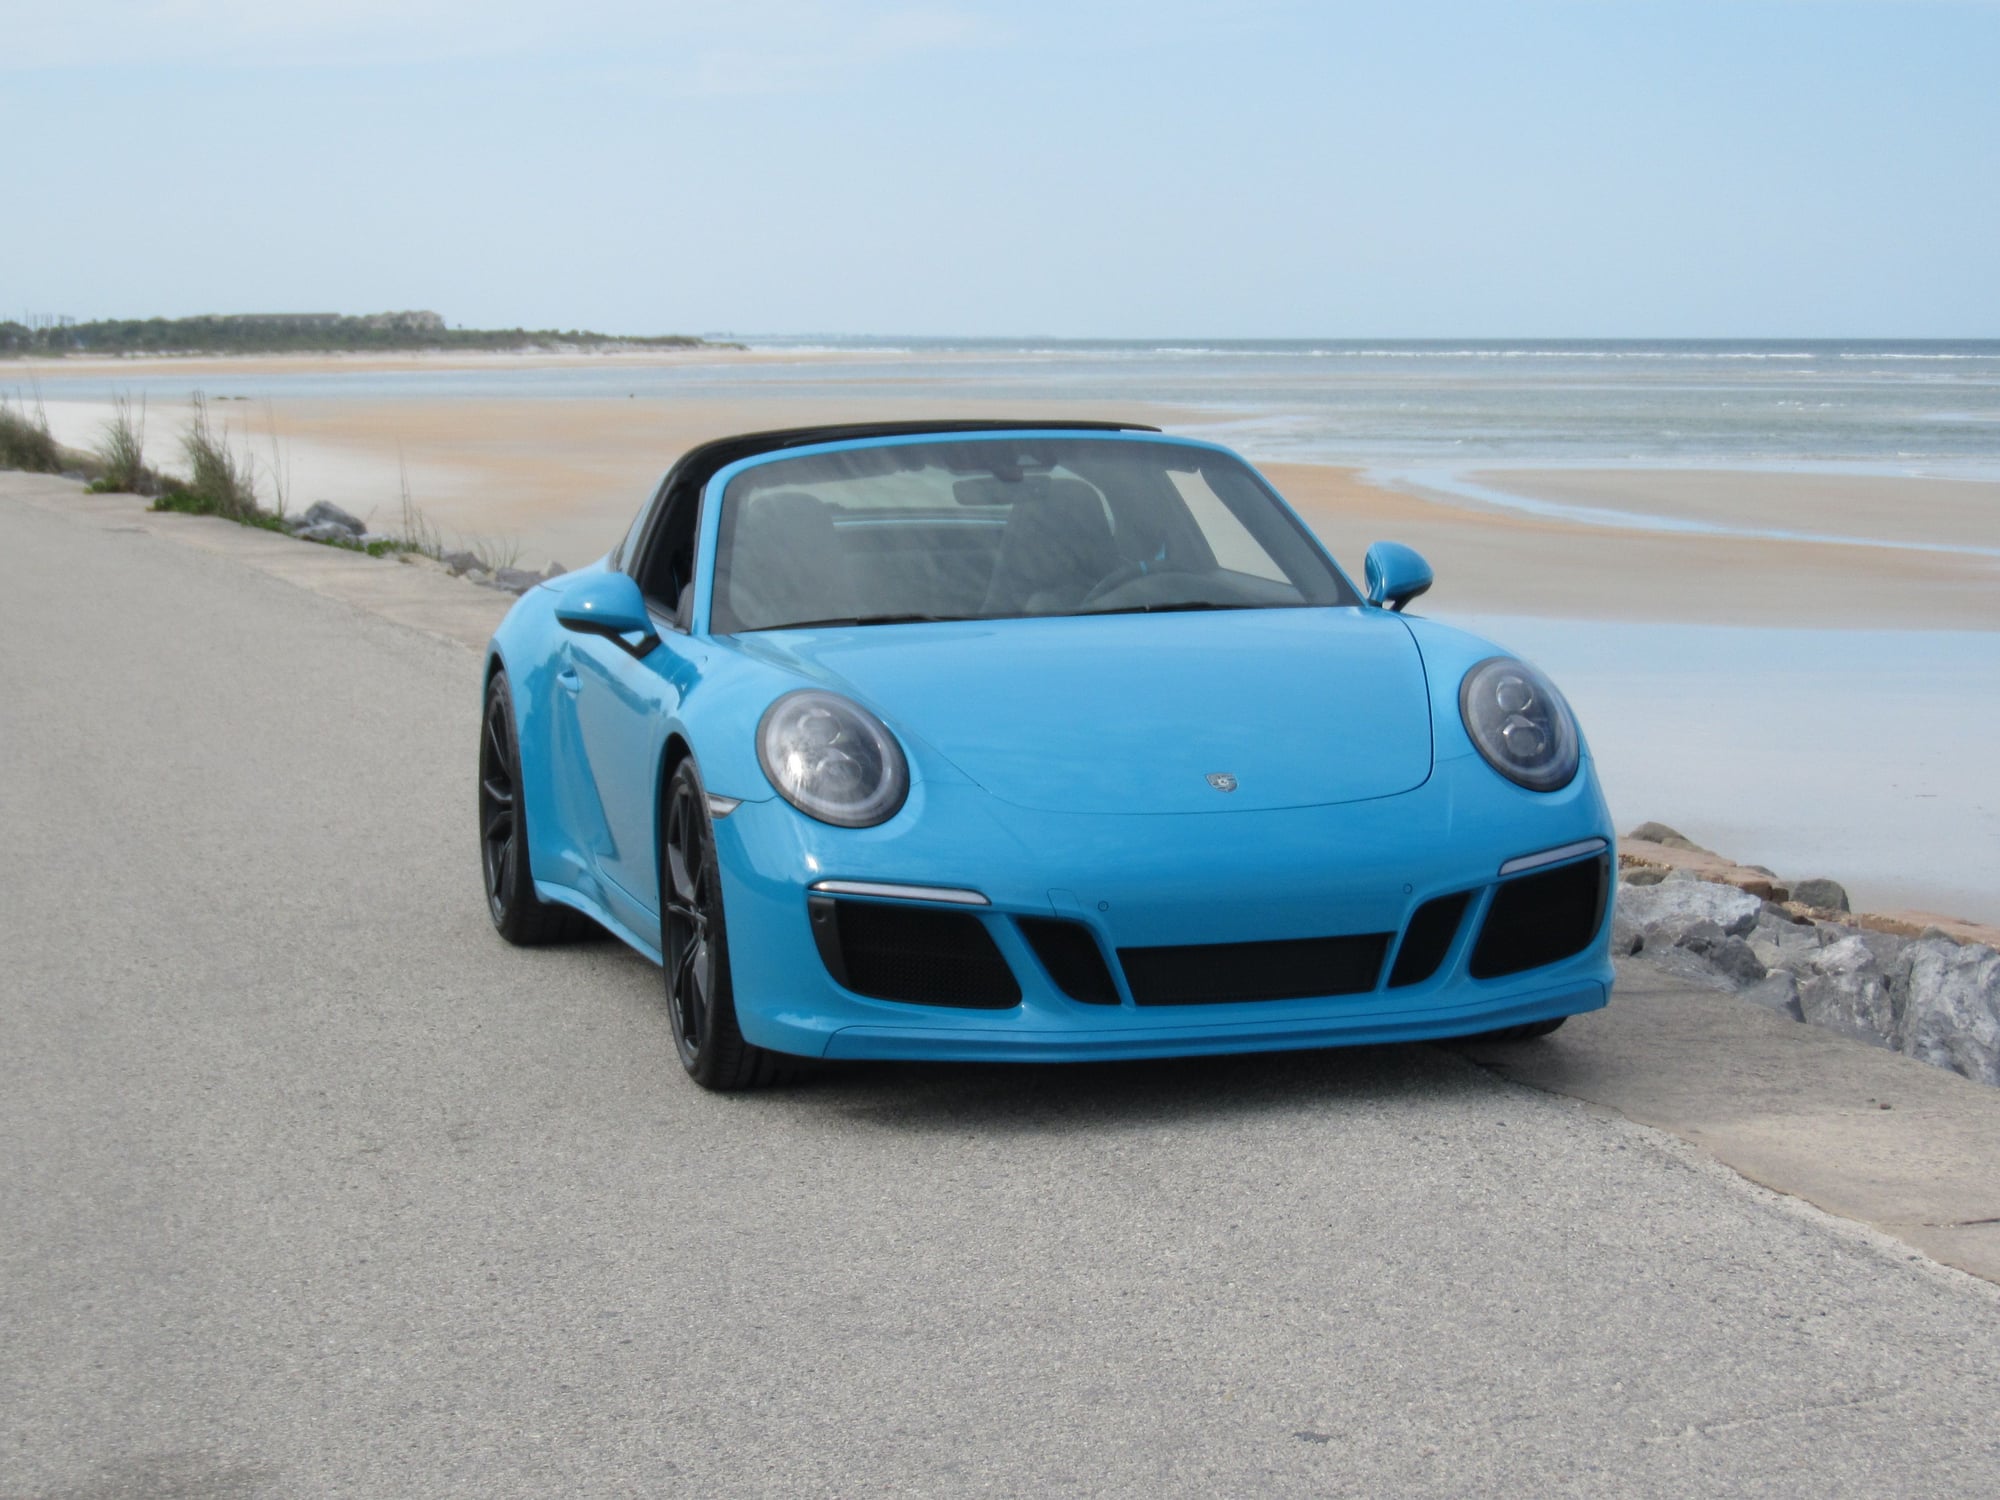 2019 Porsche 911 - 2019 Targa GTS (manual 7MT) - Used - VIN WP0BB2A92KS125391 - 7,000 Miles - 6 cyl - AWD - Manual - Convertible - Blue - Palm Coast, FL 32137, United States